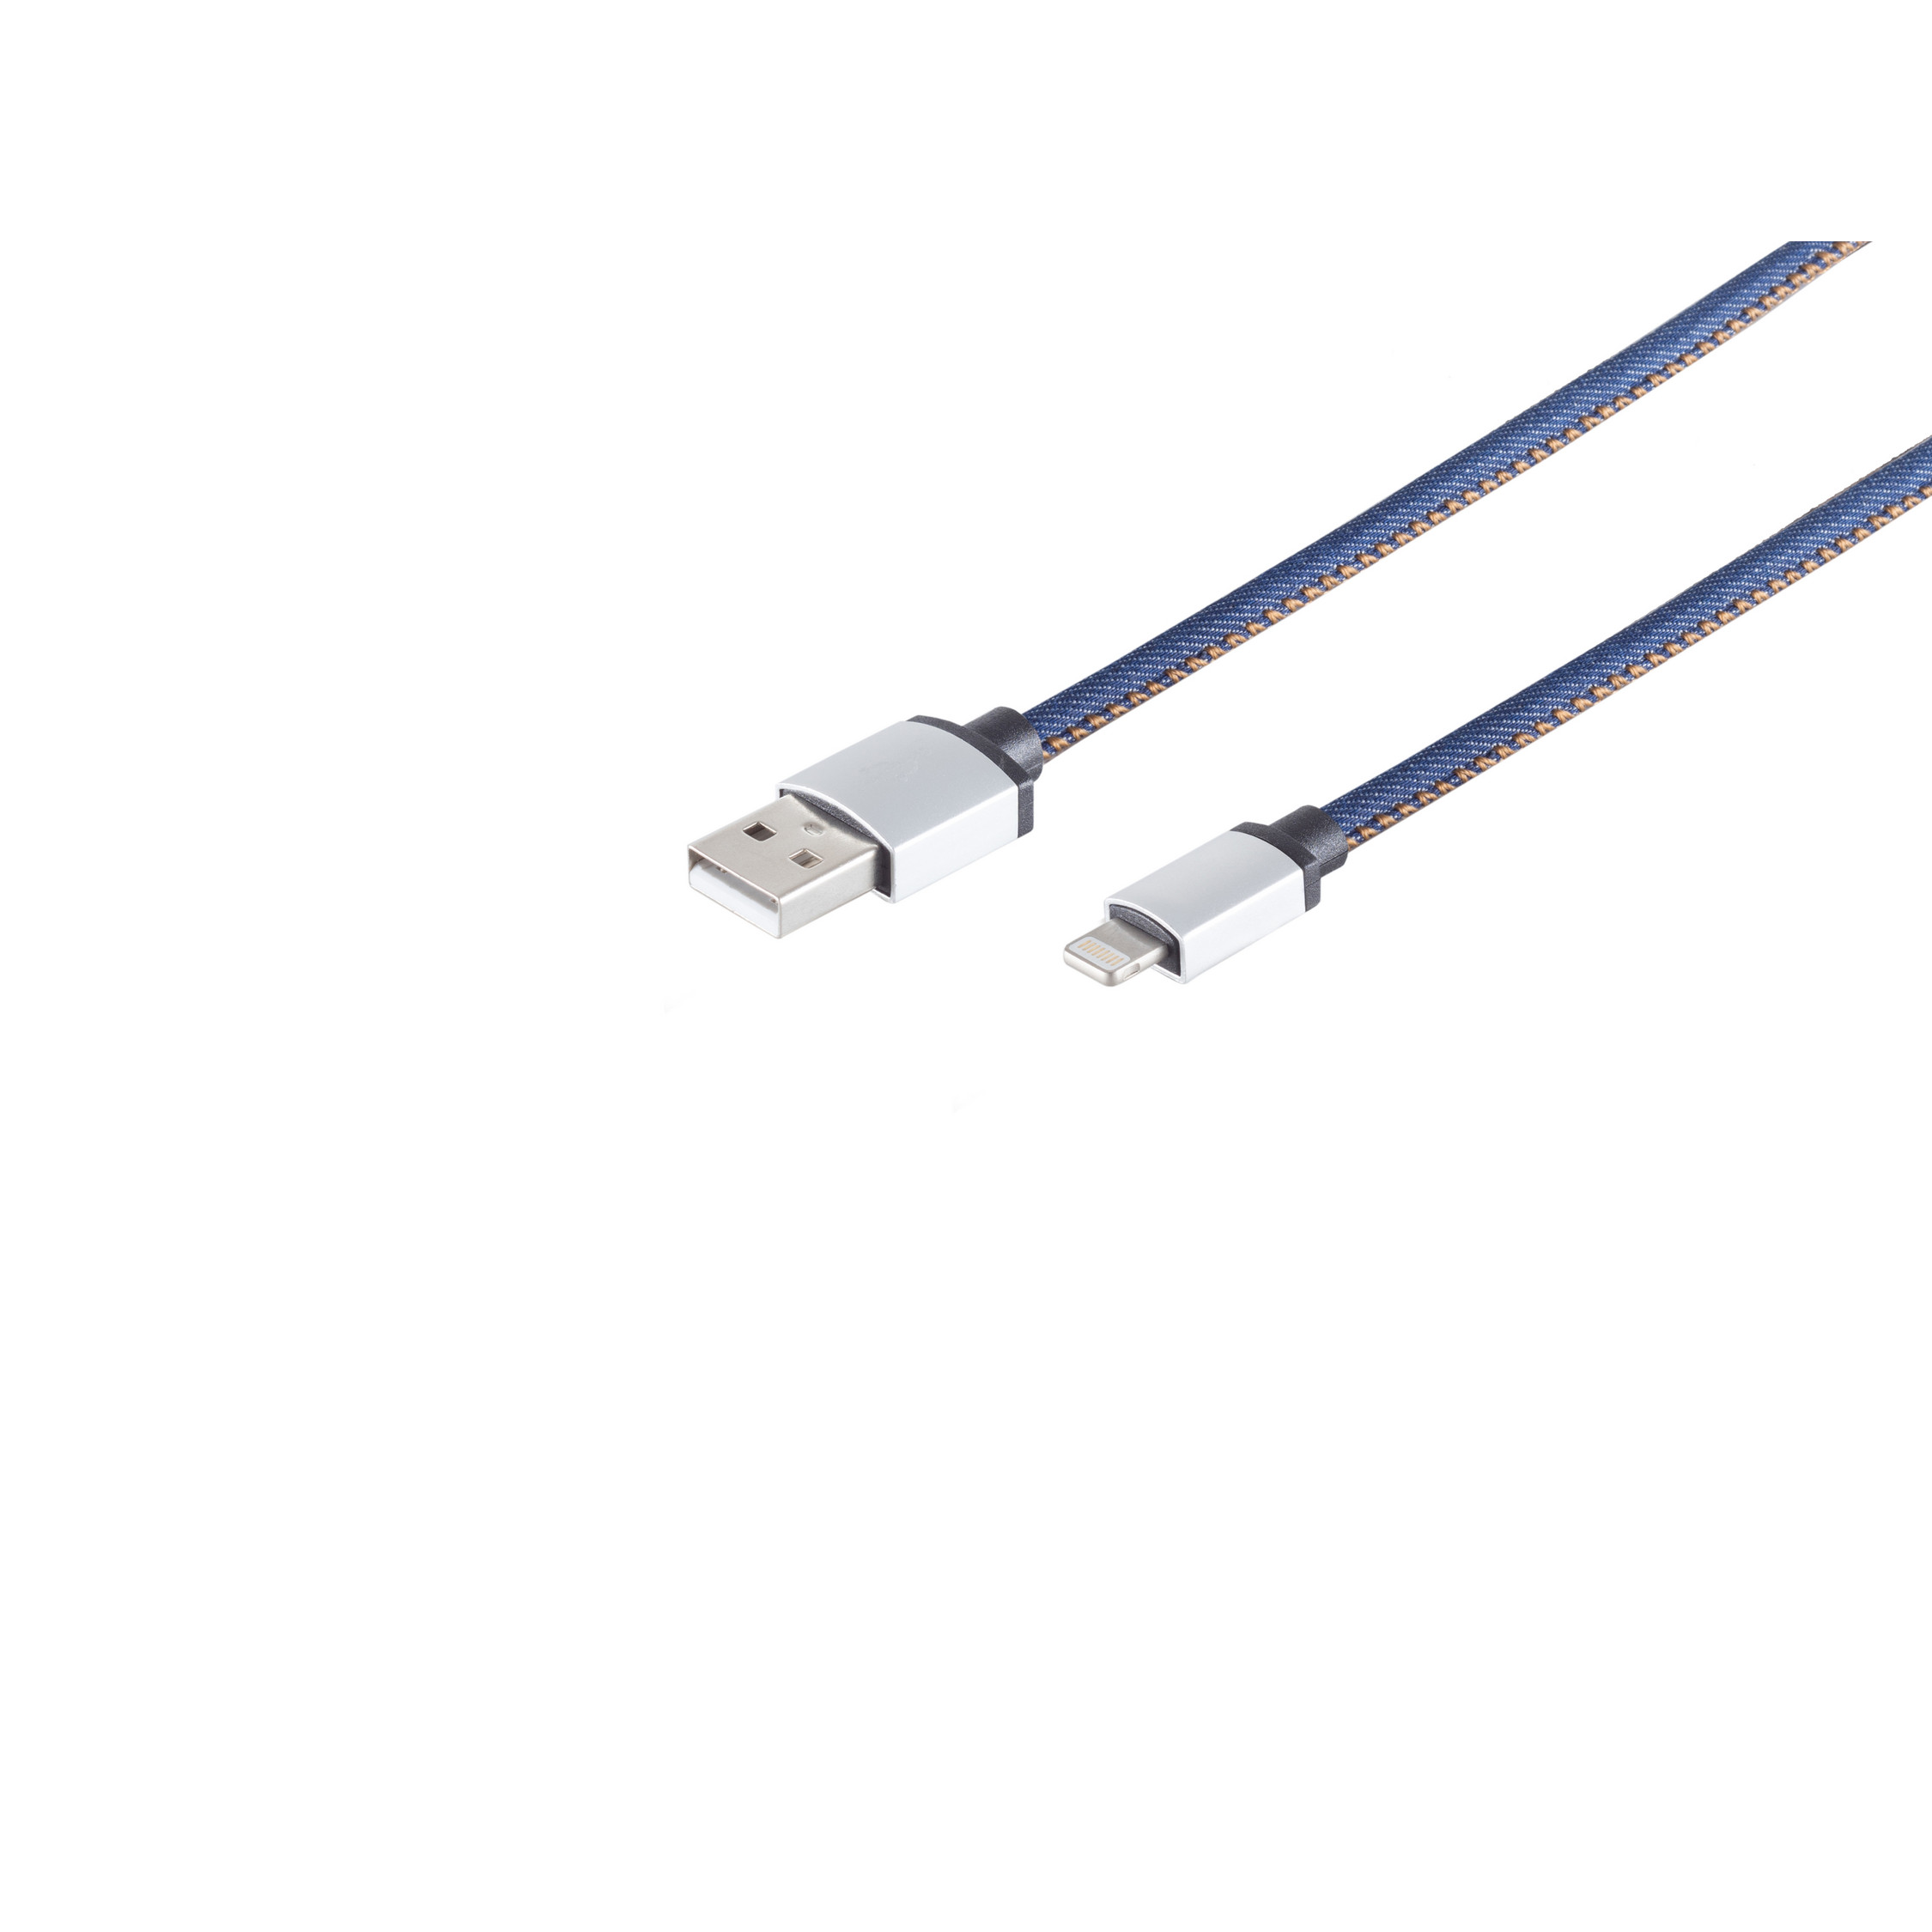 auf Stecker, Stecker CONNECTIVITY blau USB S/CONN MAXIMUM 1m A Kabel 8-pin USB-Ladekabel